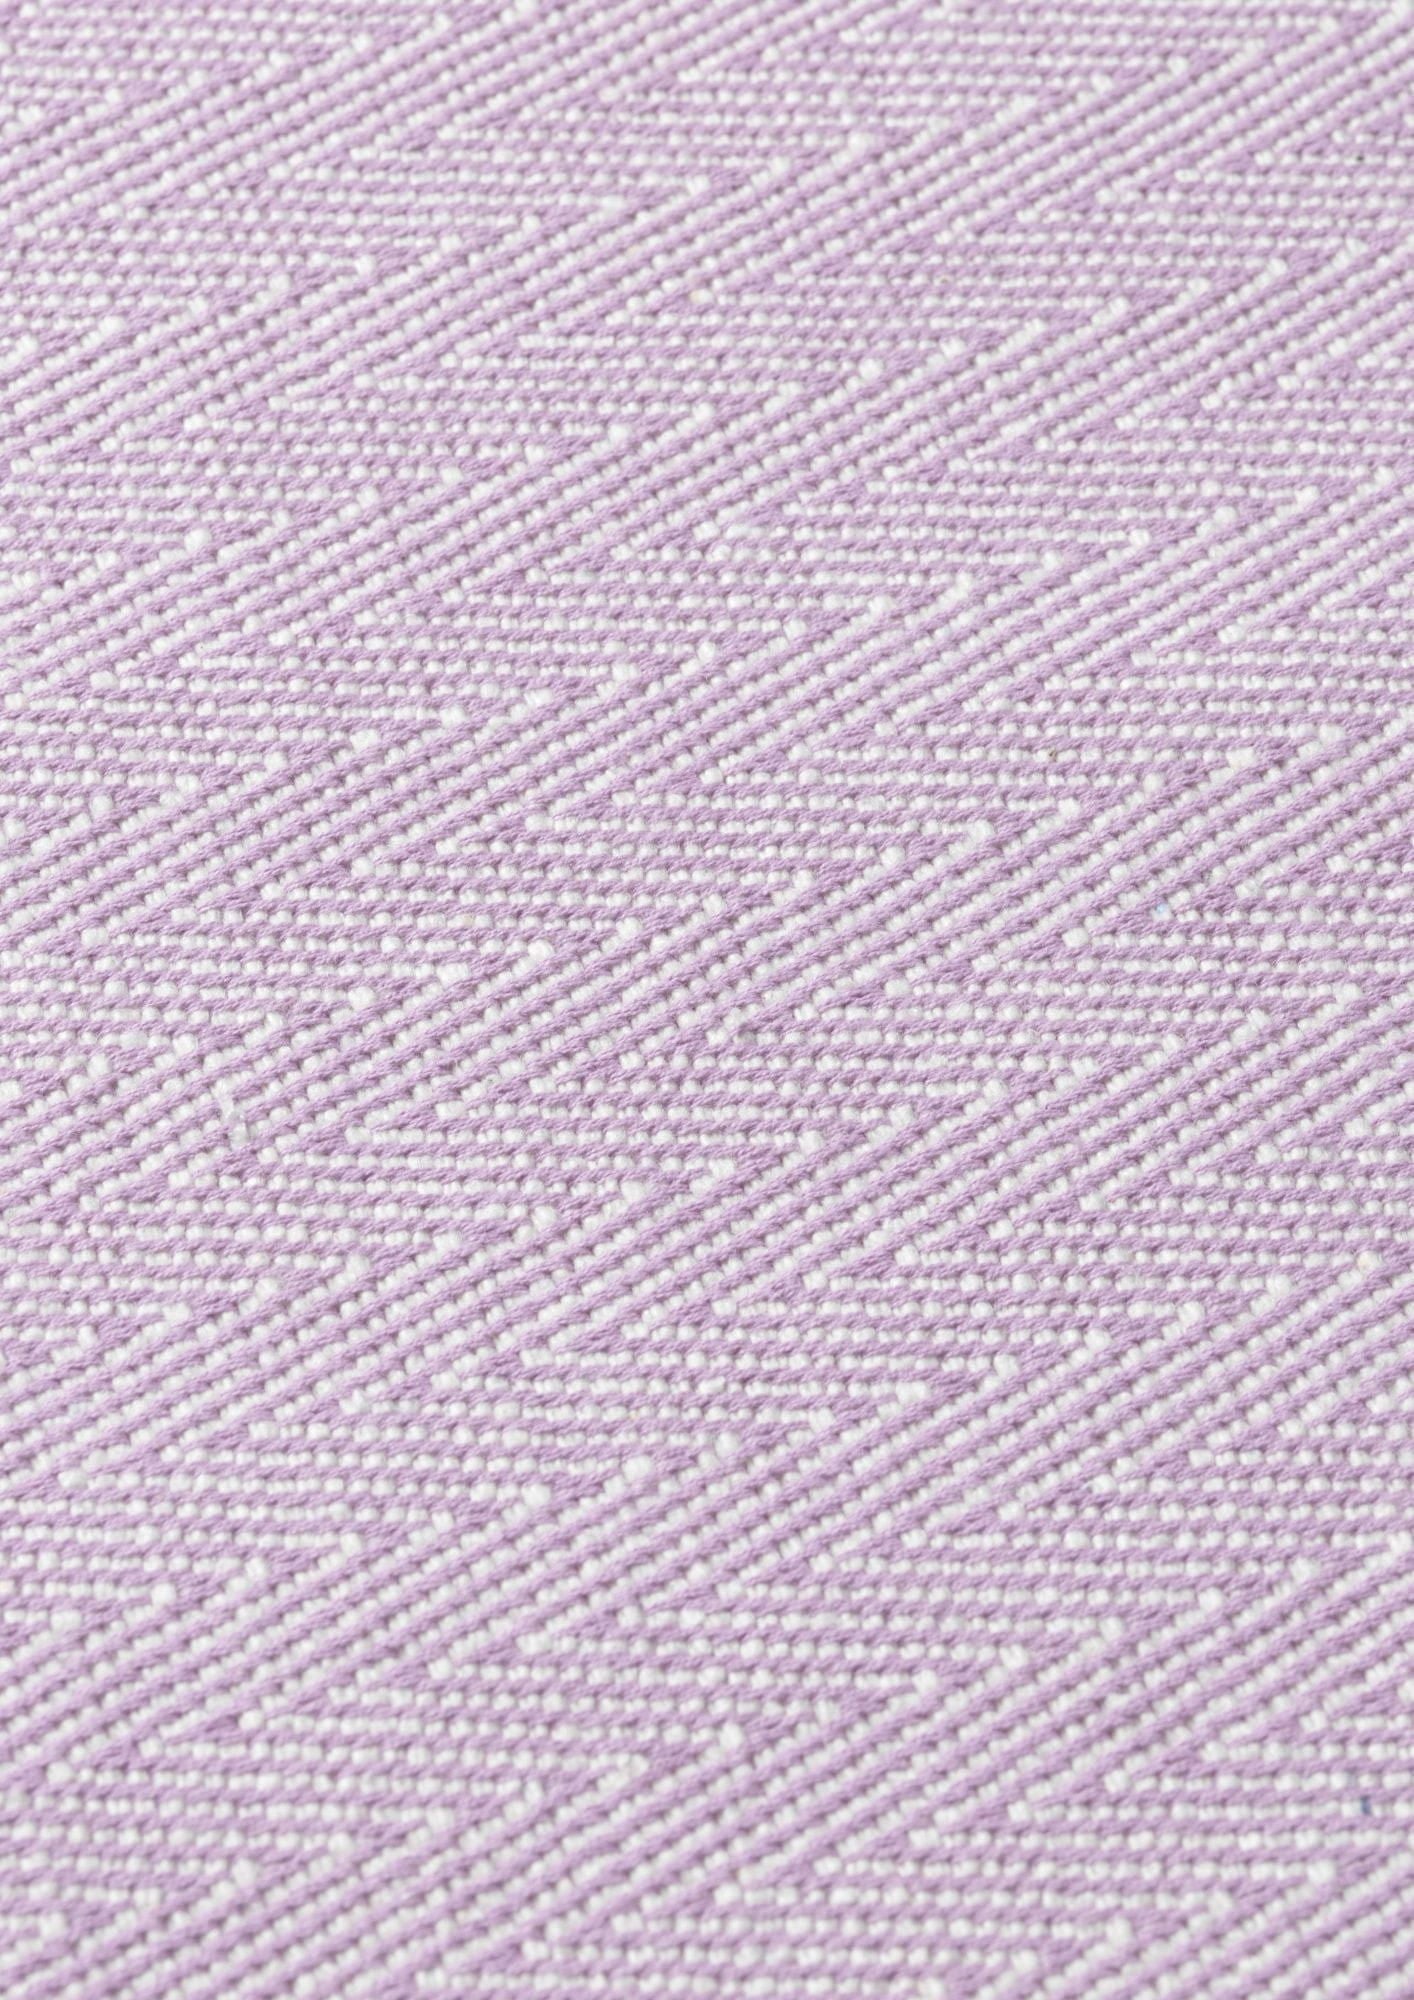 Lyngby Porcelæn Fischgräten -Placemat 43x30 cm, lila